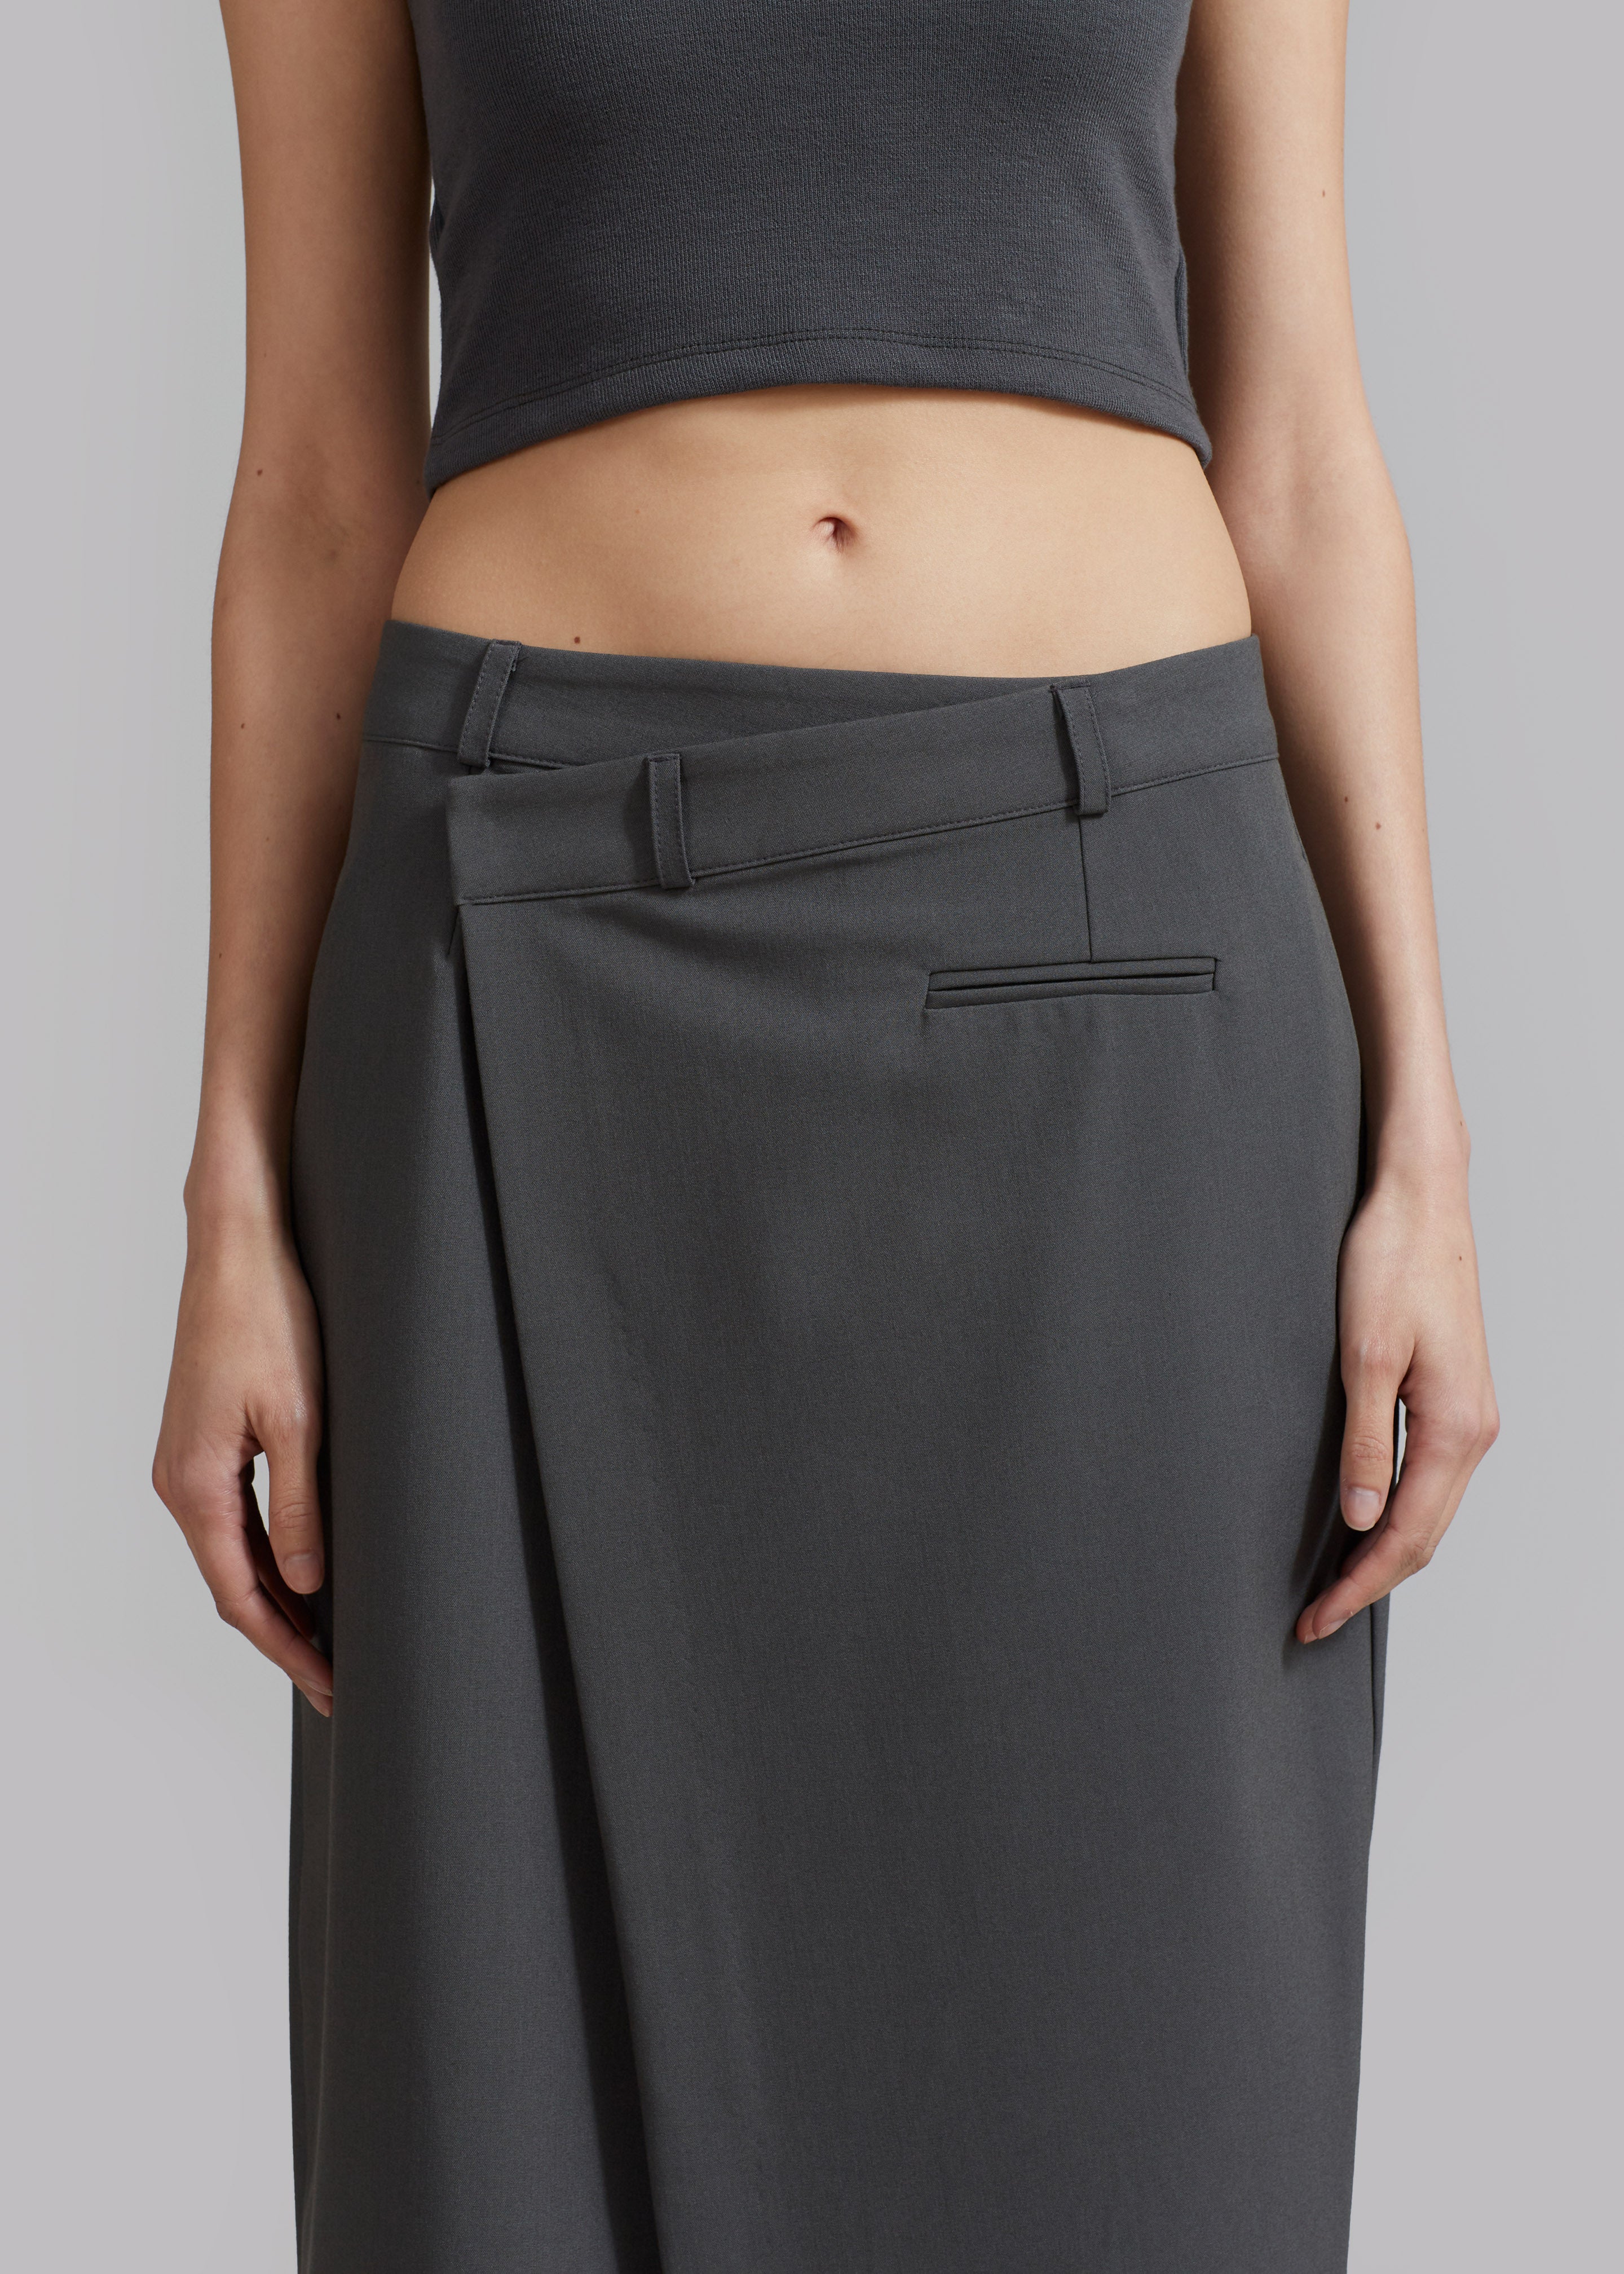 Annabel Asymmetric Midi Skirt - Grey - 3